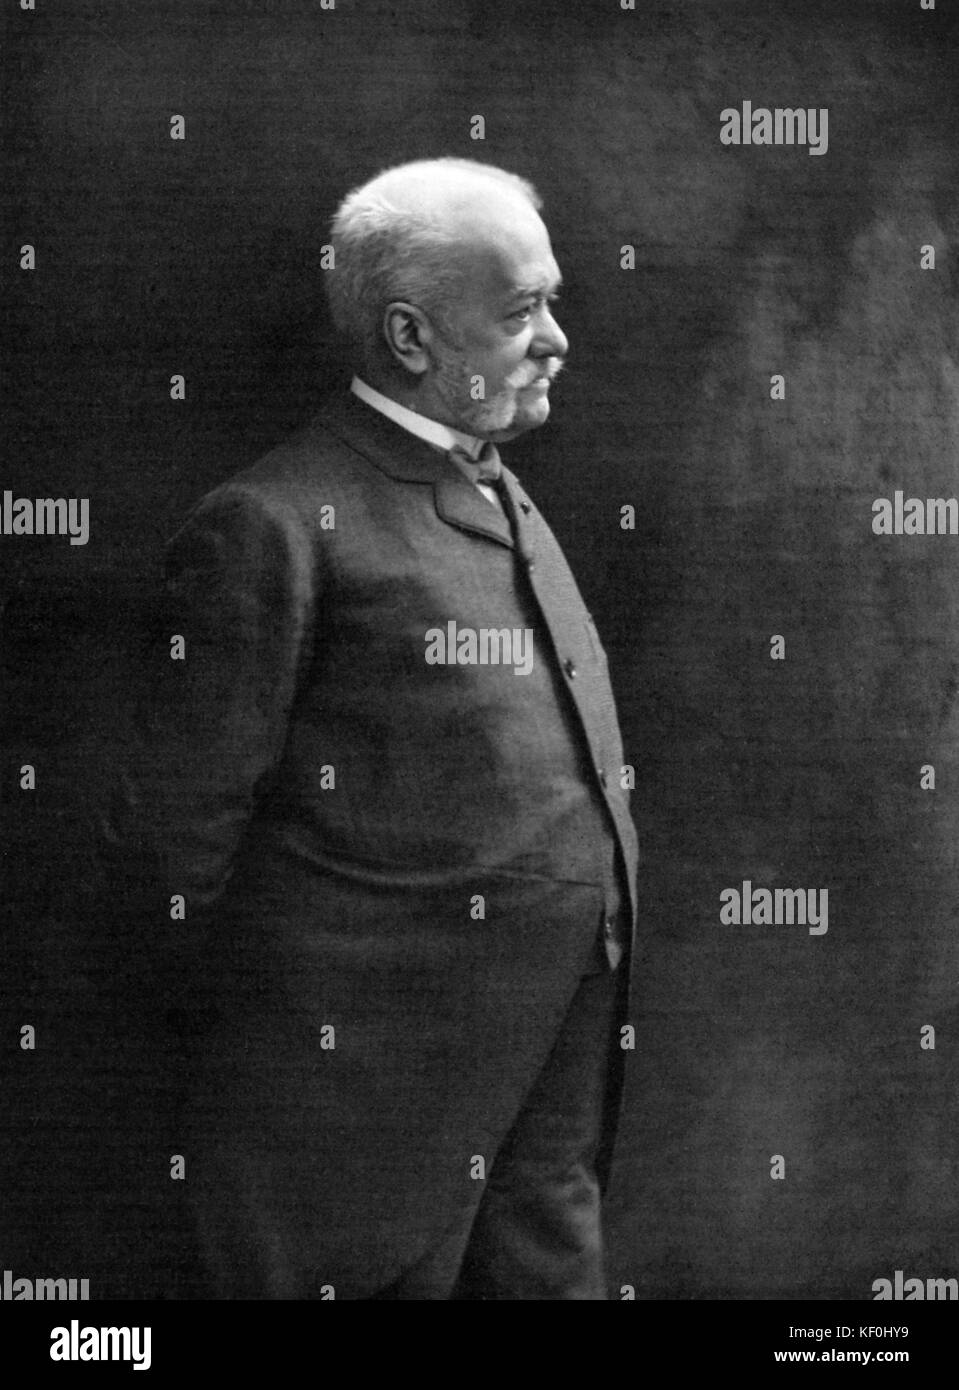 Albert Vizentini, regista di teatro National de l' Opera Comique (National Opéra teatro comico) a Parigi (1841-1906). Foto originale di Paul Berger. Foto Stock